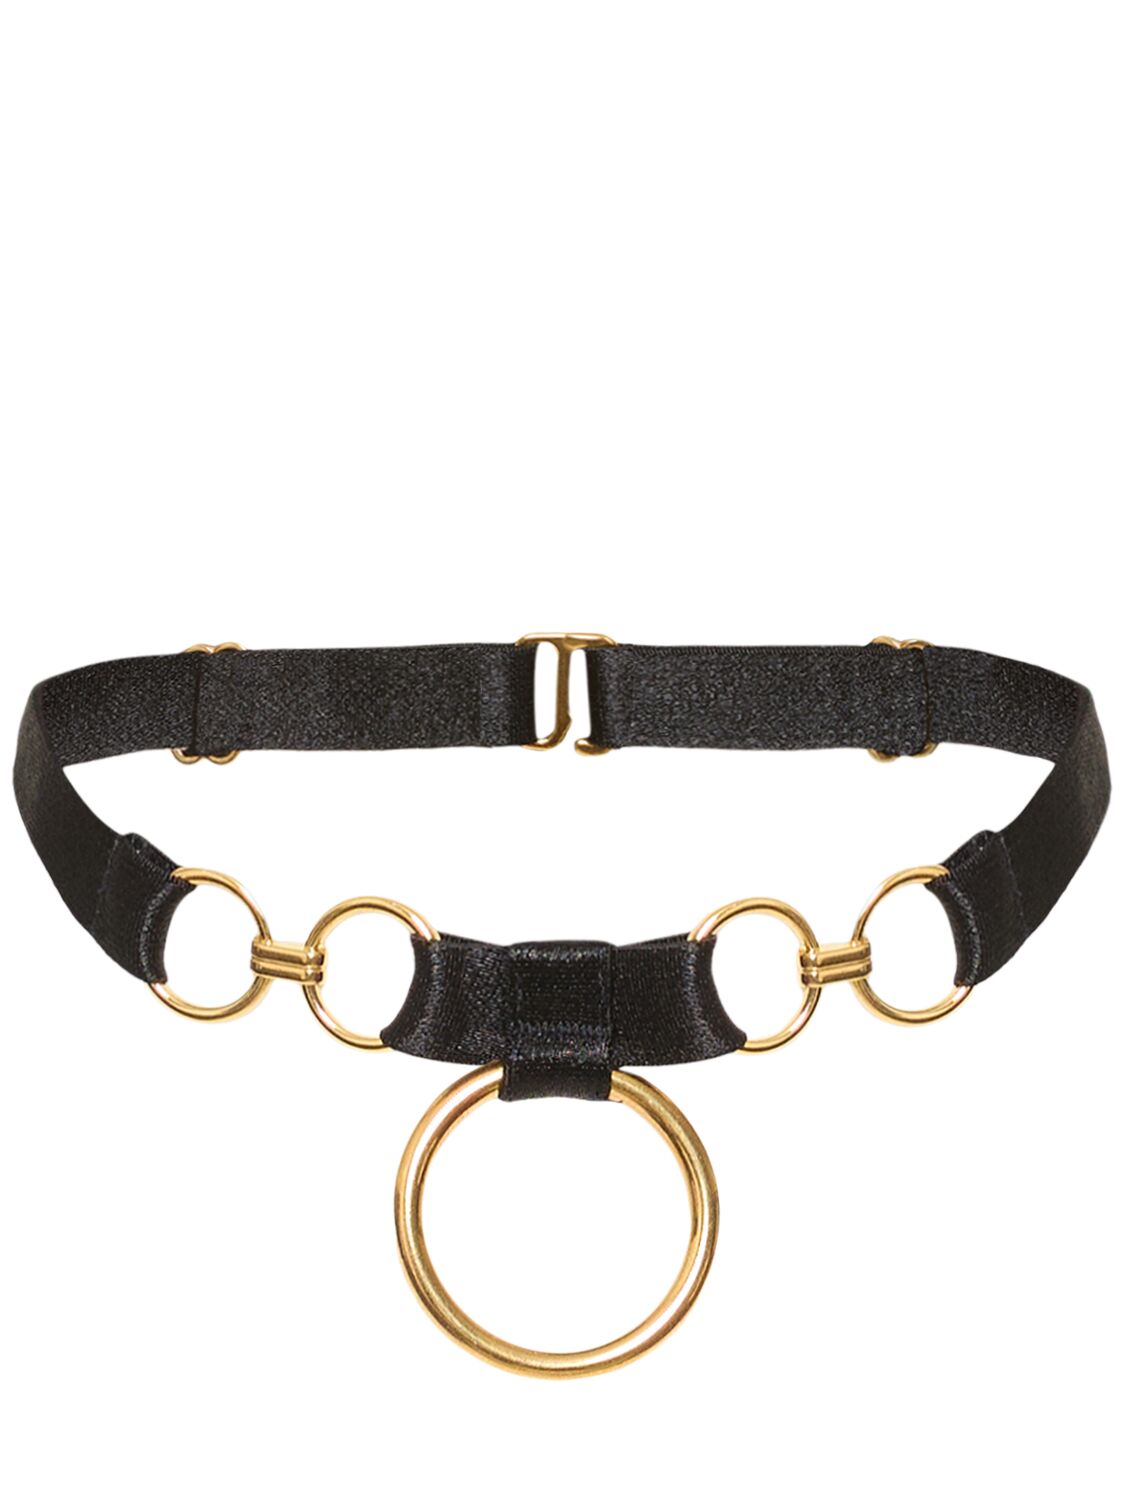 Bordelle Retta Ring Collar In Black